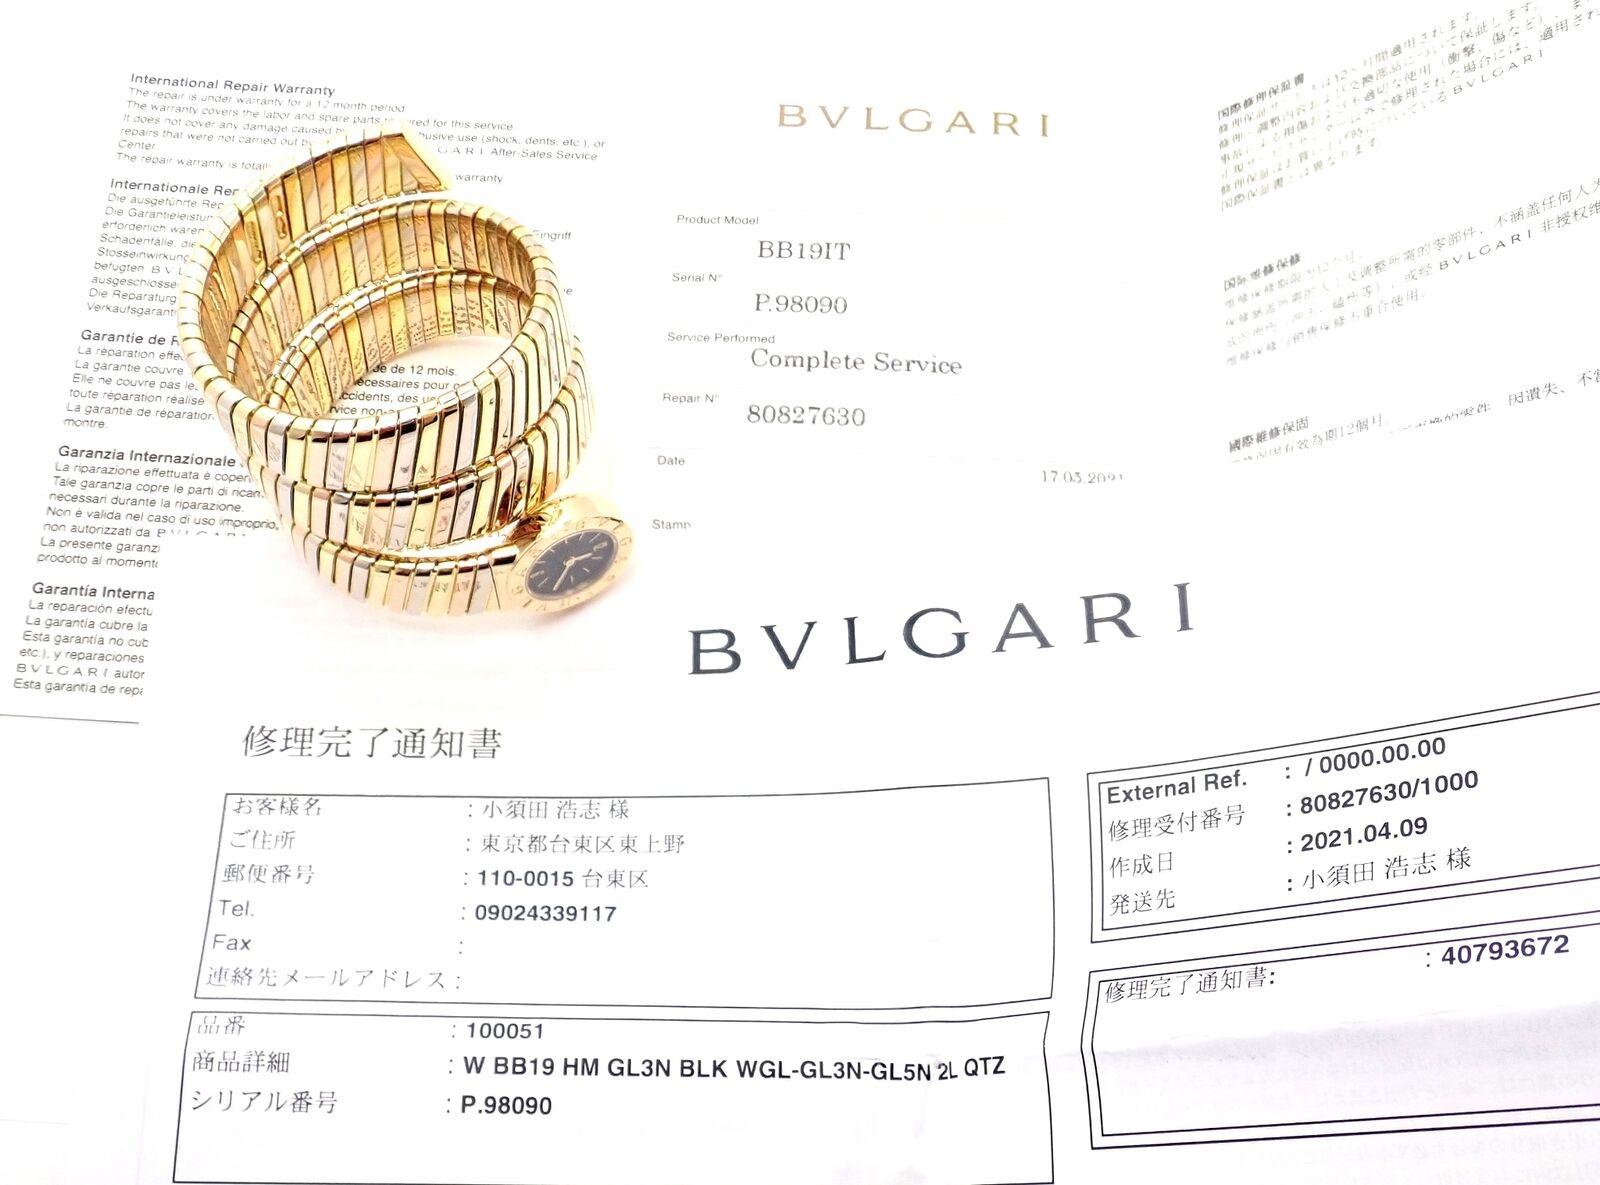 Bulgari lady's 18k tri-color gold Tubogas Serpent Snake bracelet watch. 
This watch comes with authenticity paper.
Details:
Model: BB191T
Movement Type: Quartz
Case Size: 3/4